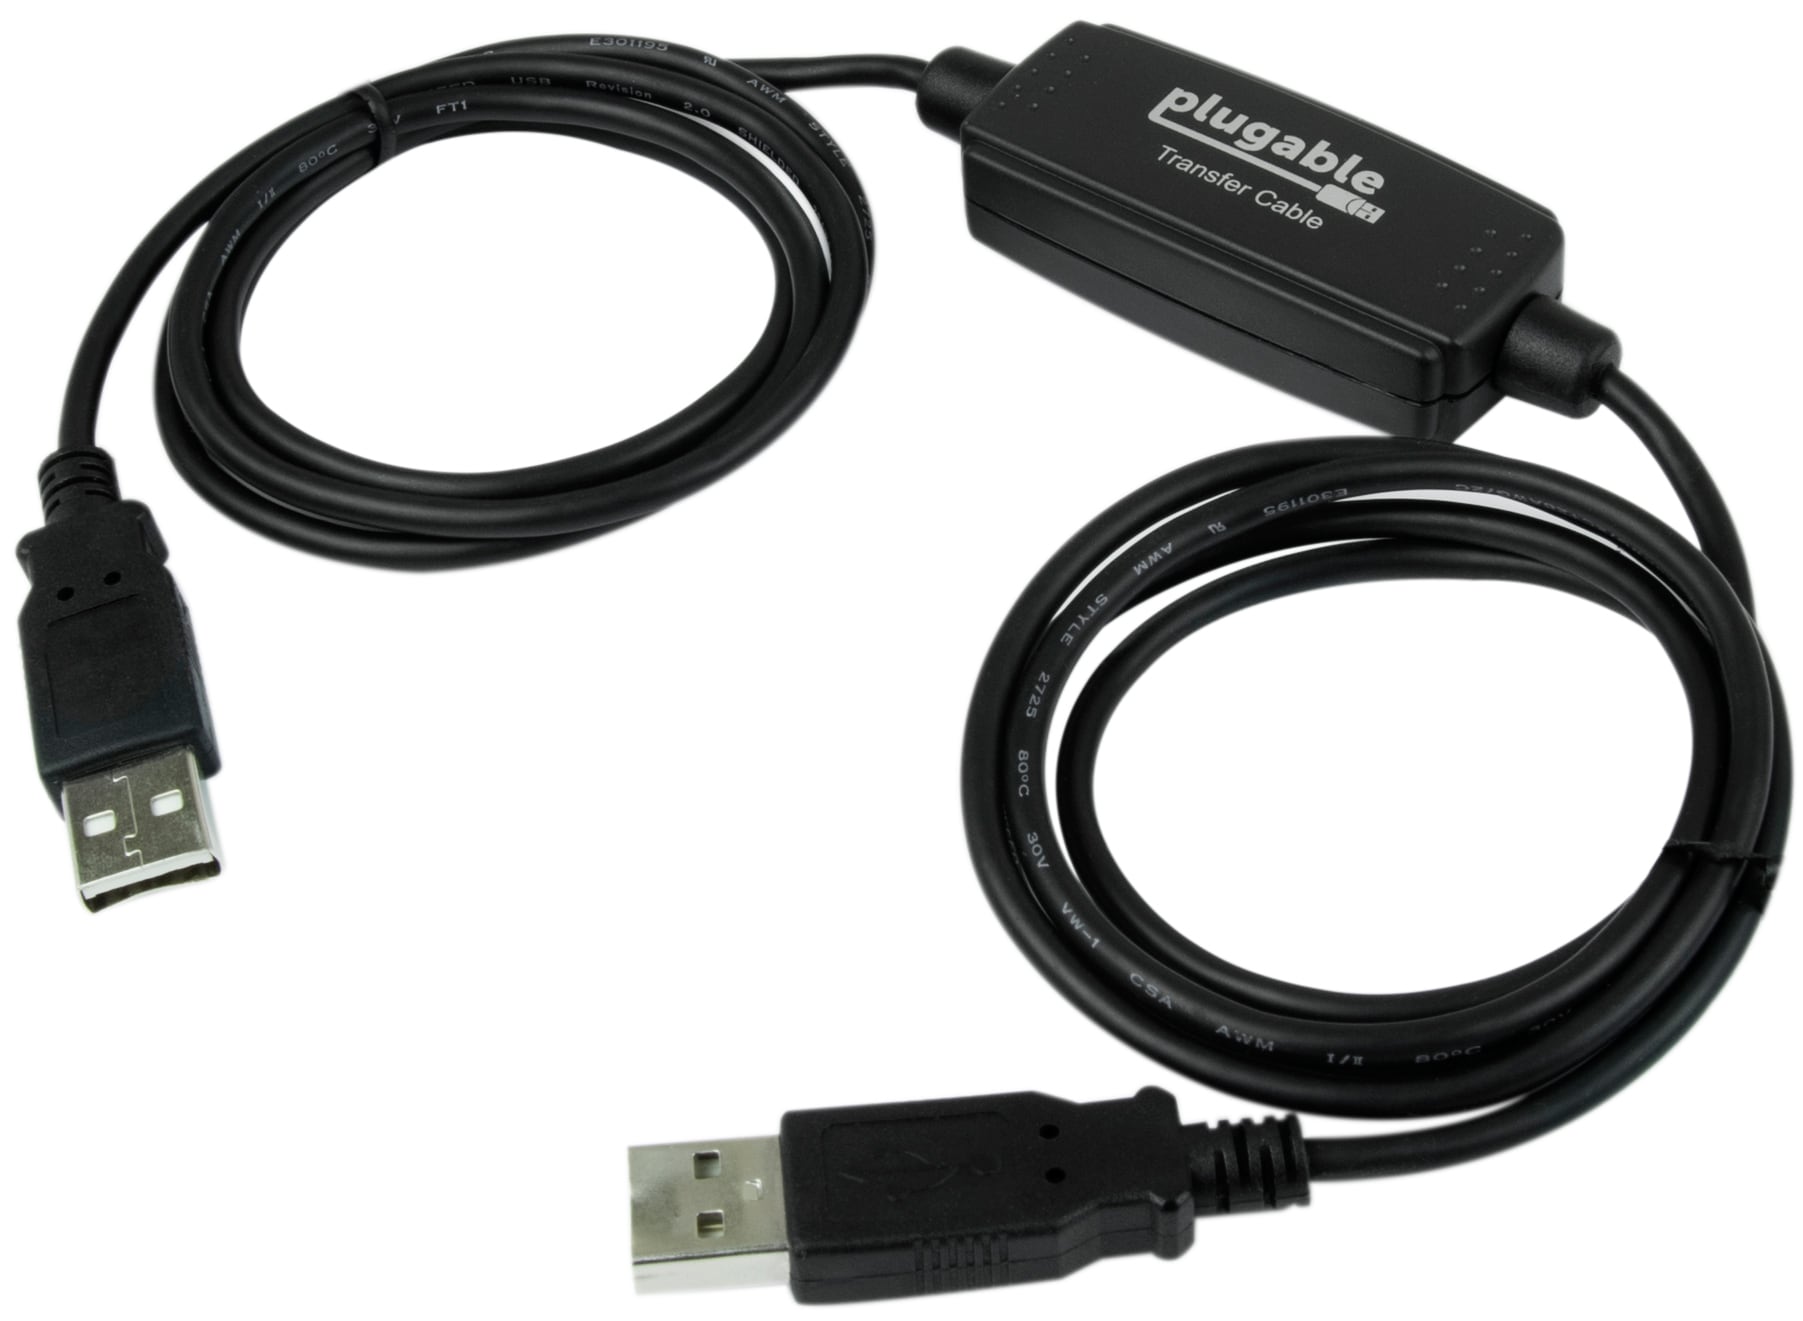 Plugable USB Transfer Cable